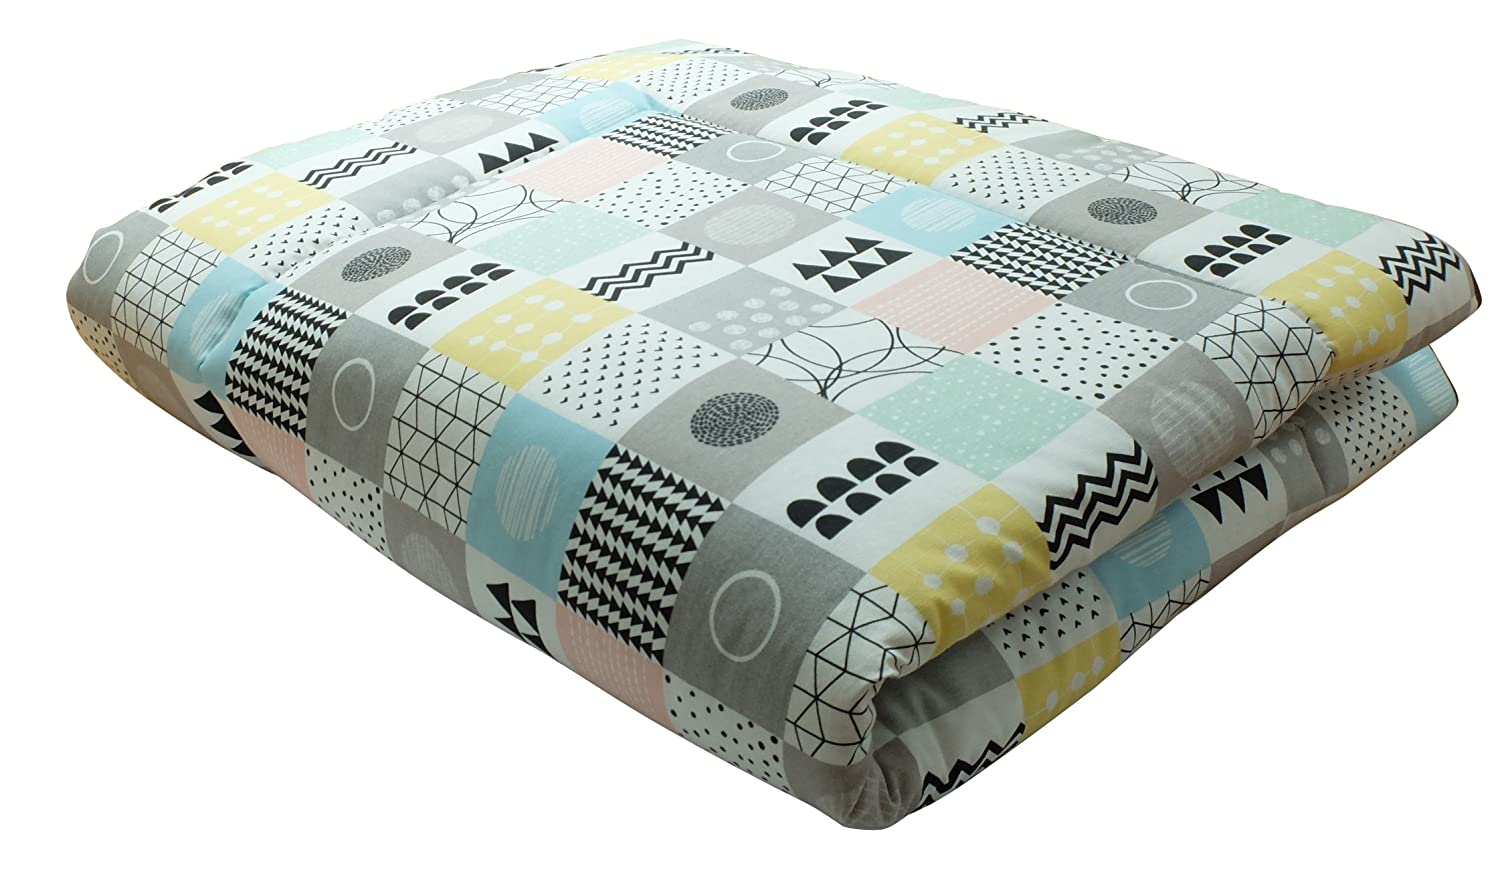 Ideenreich 2390 Crawling Blanket King Playpen Mattress, 120 x 120 cm Multi-Coloured